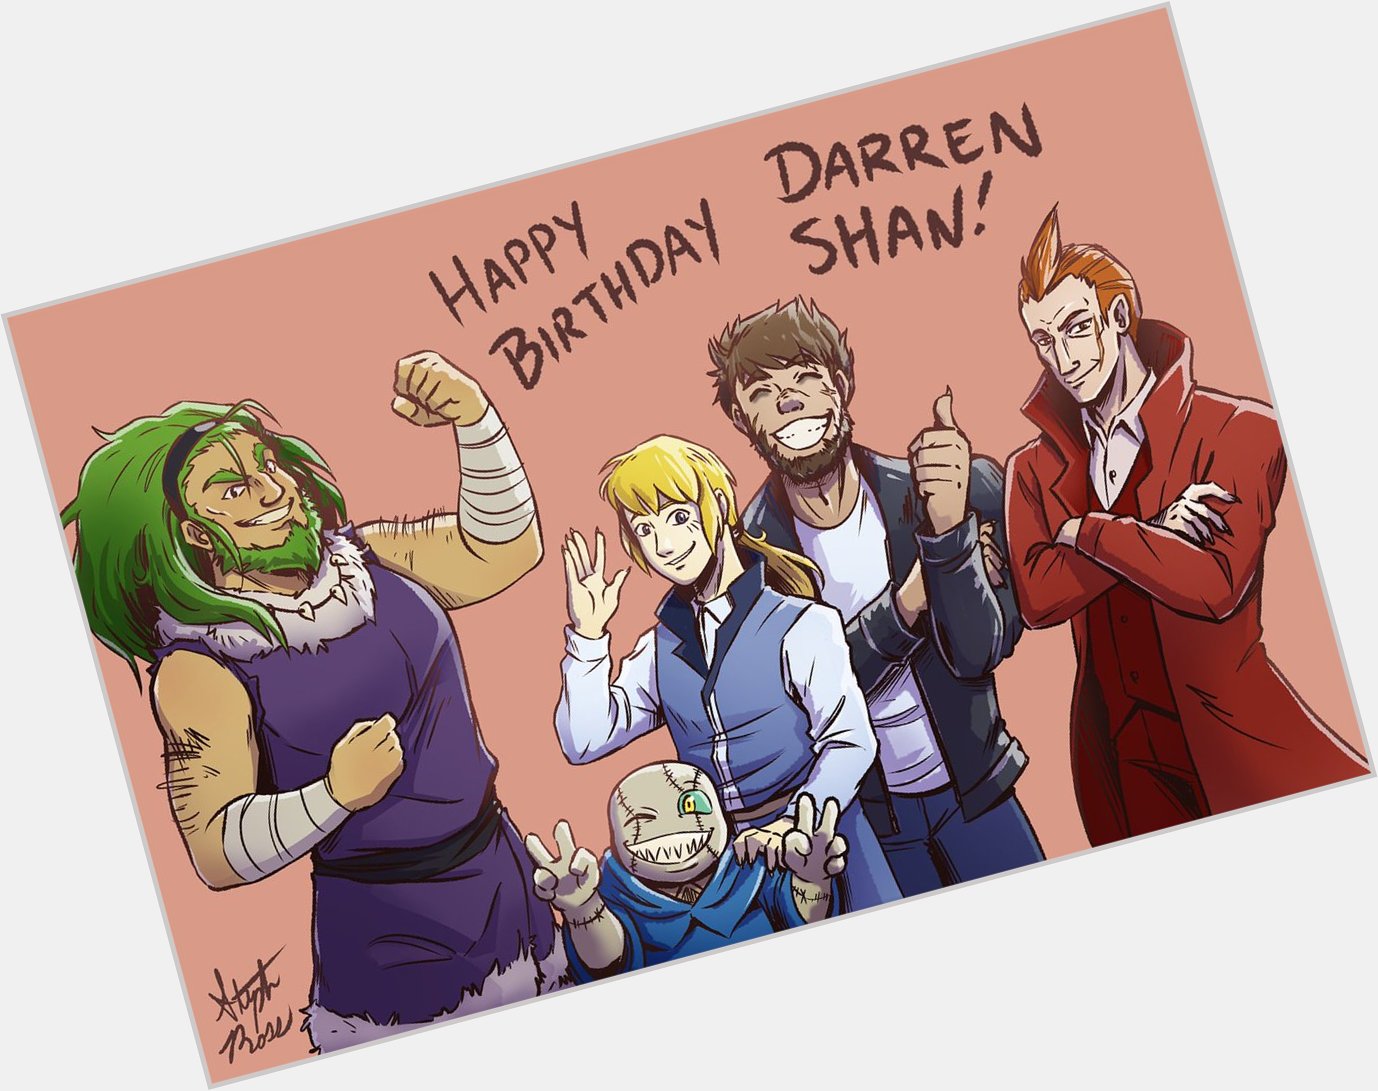 Happy birthday Darren Shan!  